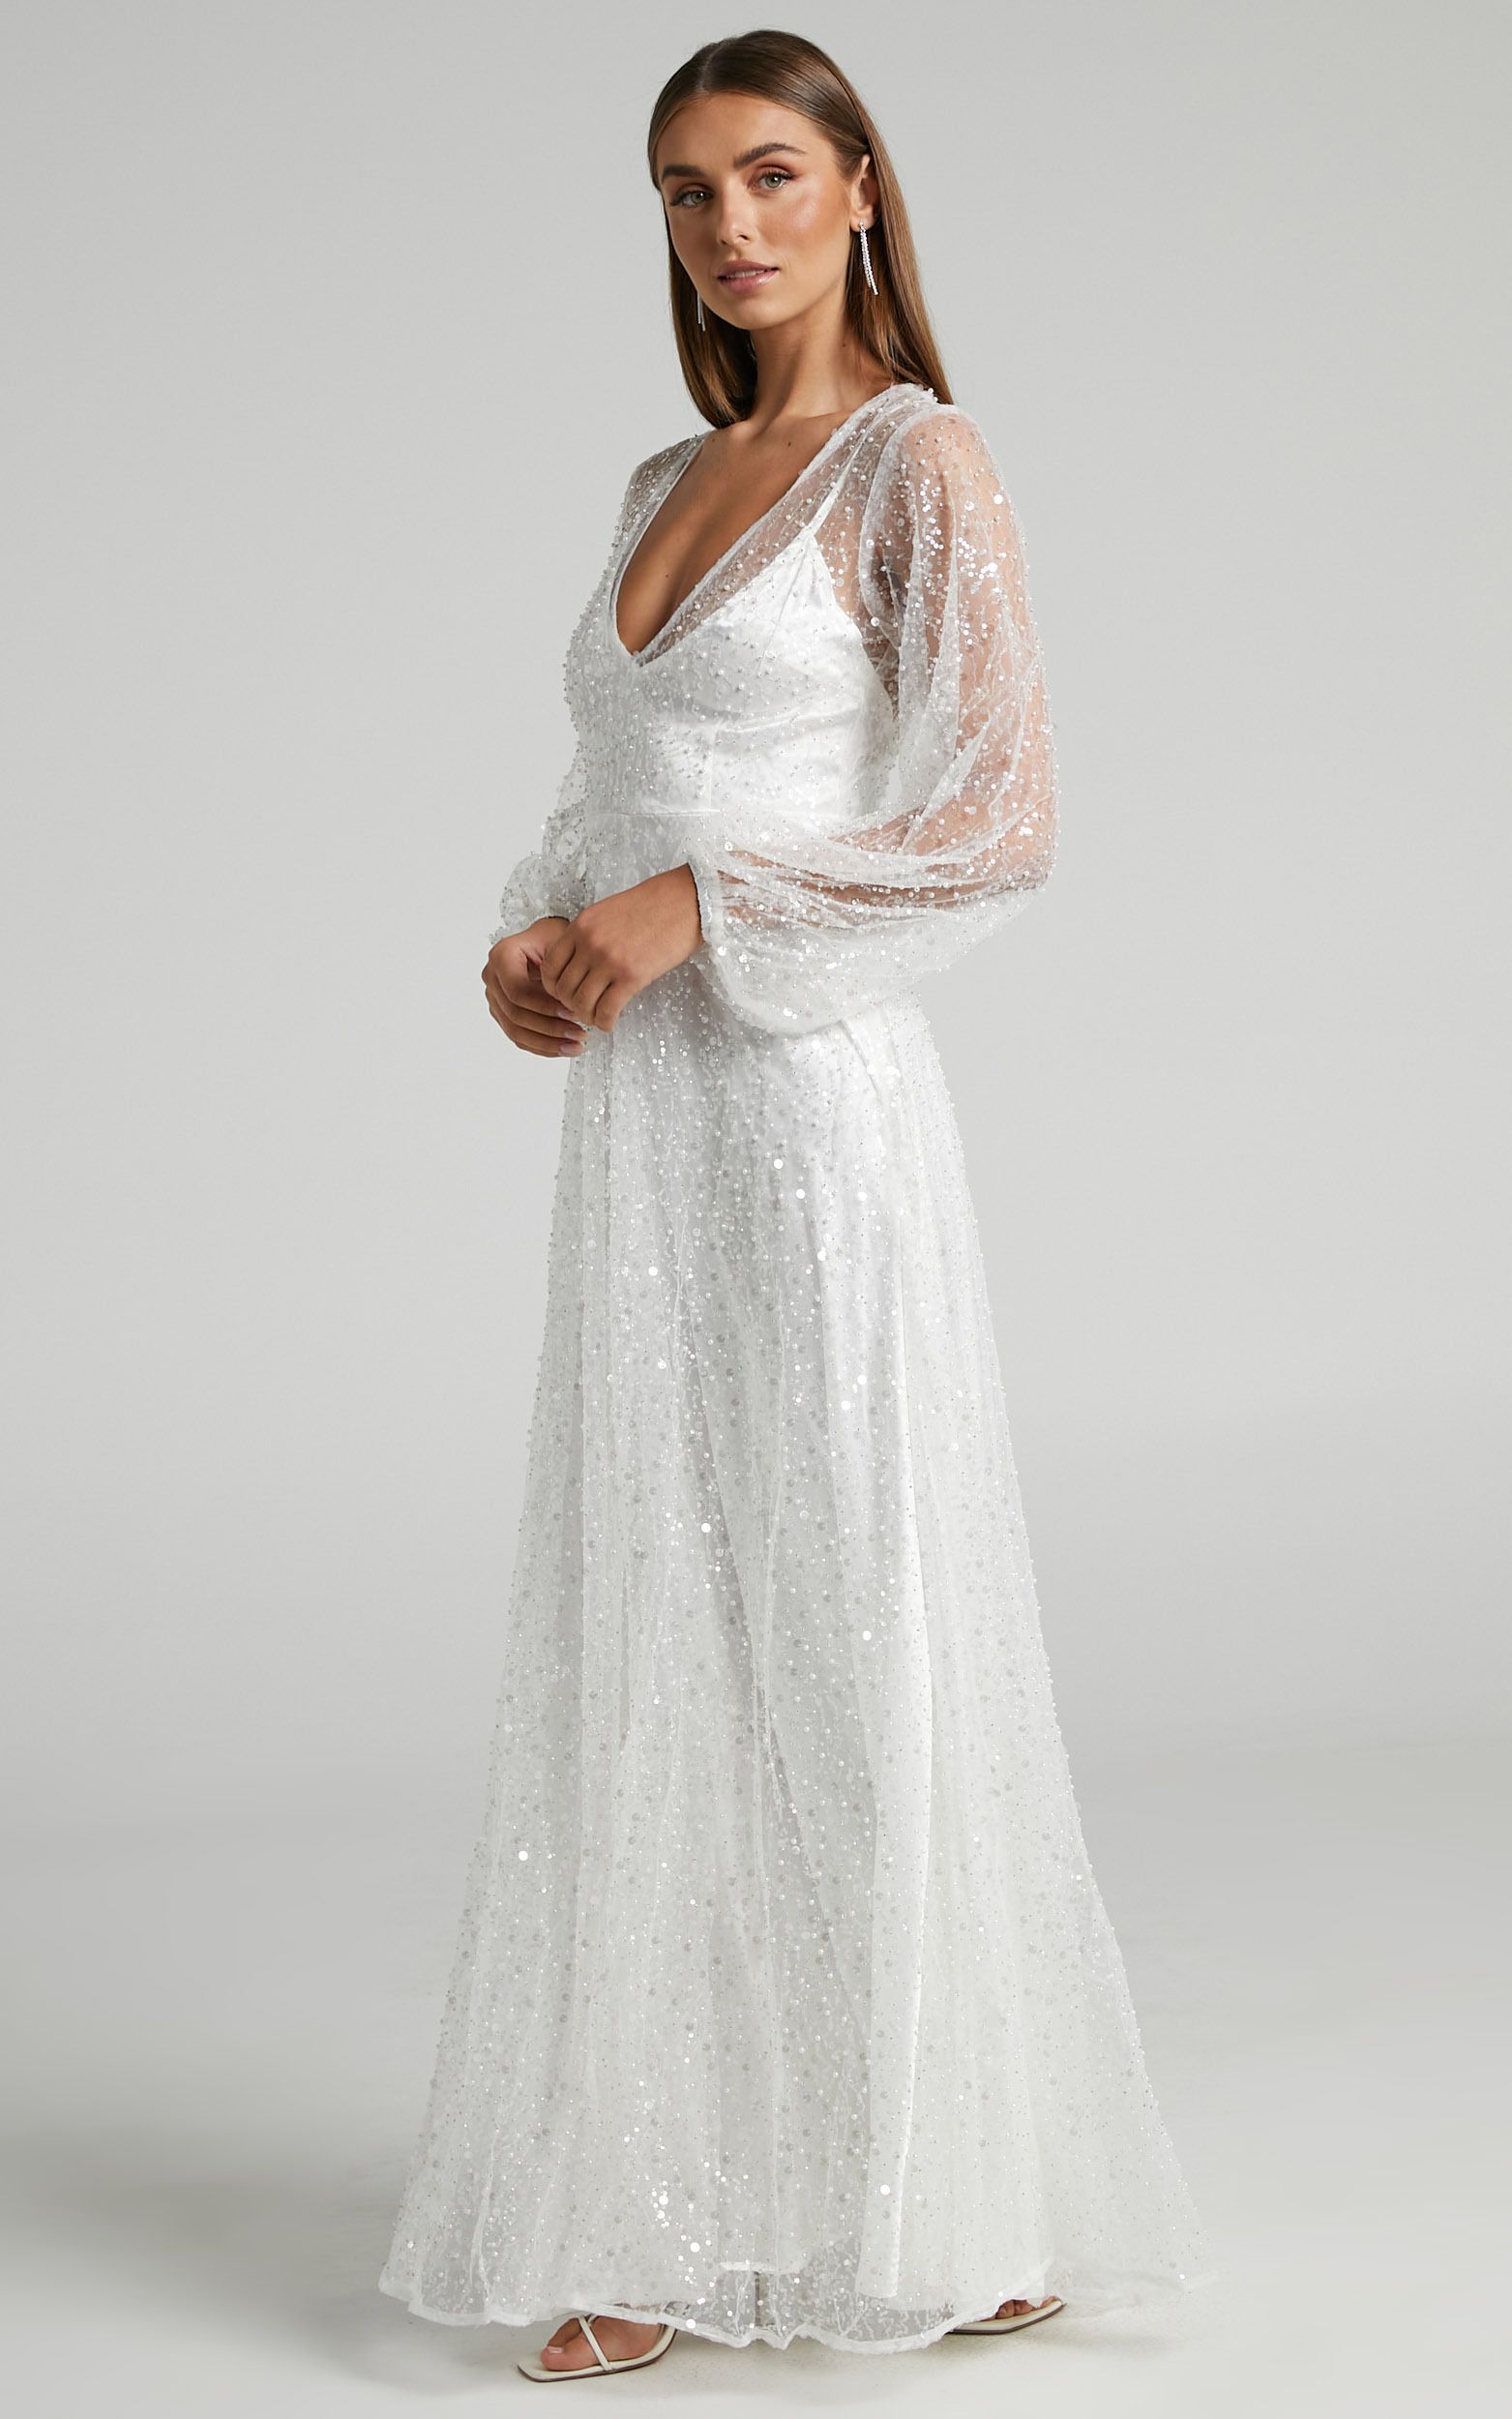 Leauna Bridal Gown - Sheer Long Sleeve Deep V Neck Embellished Tulle Gown in Ivory | Showpo (US, UK & Europe)